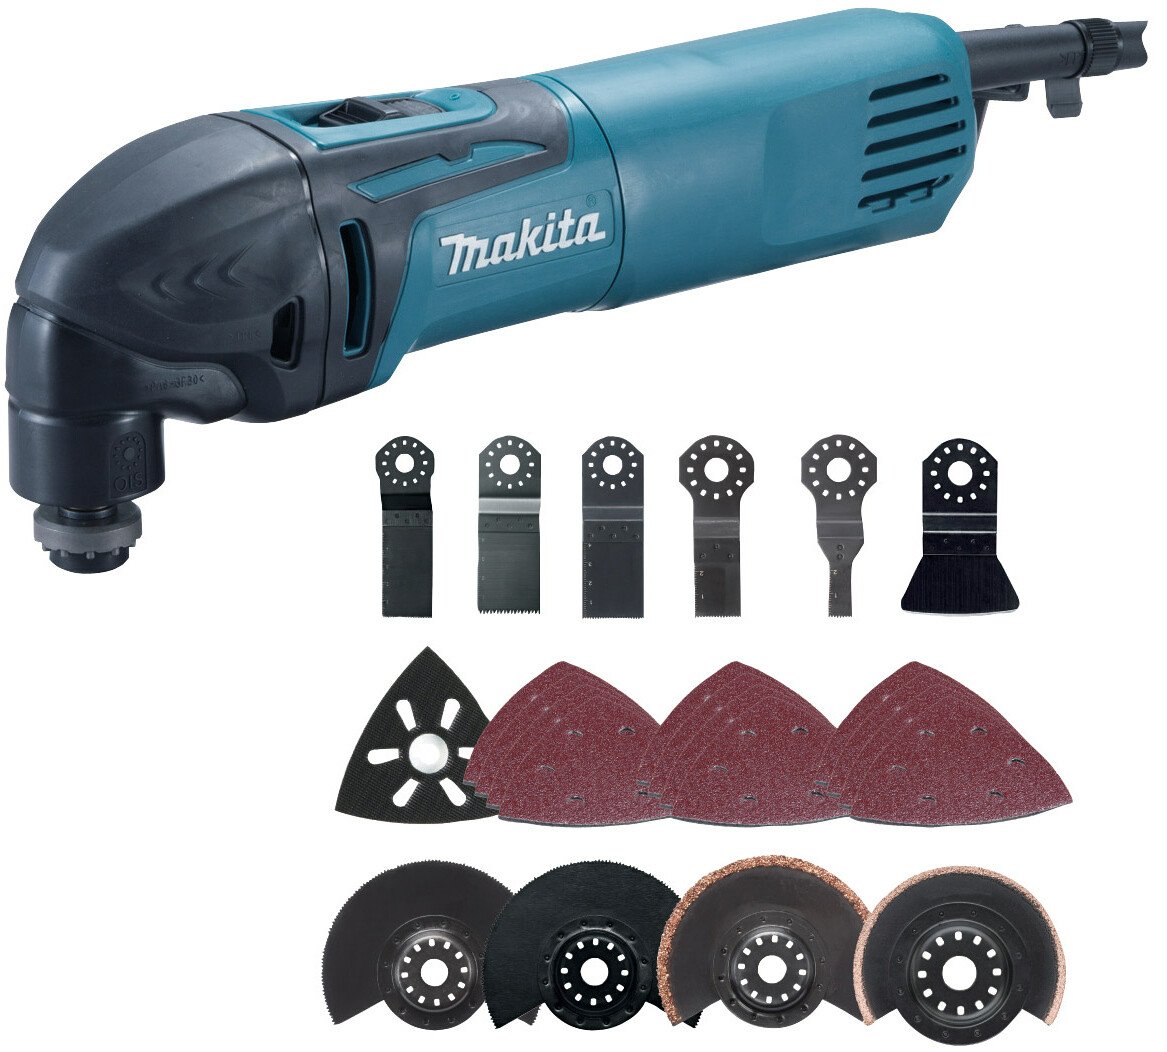 Makita TM3000CX3 320W Oscillating Multi Tool With 42 Accessories